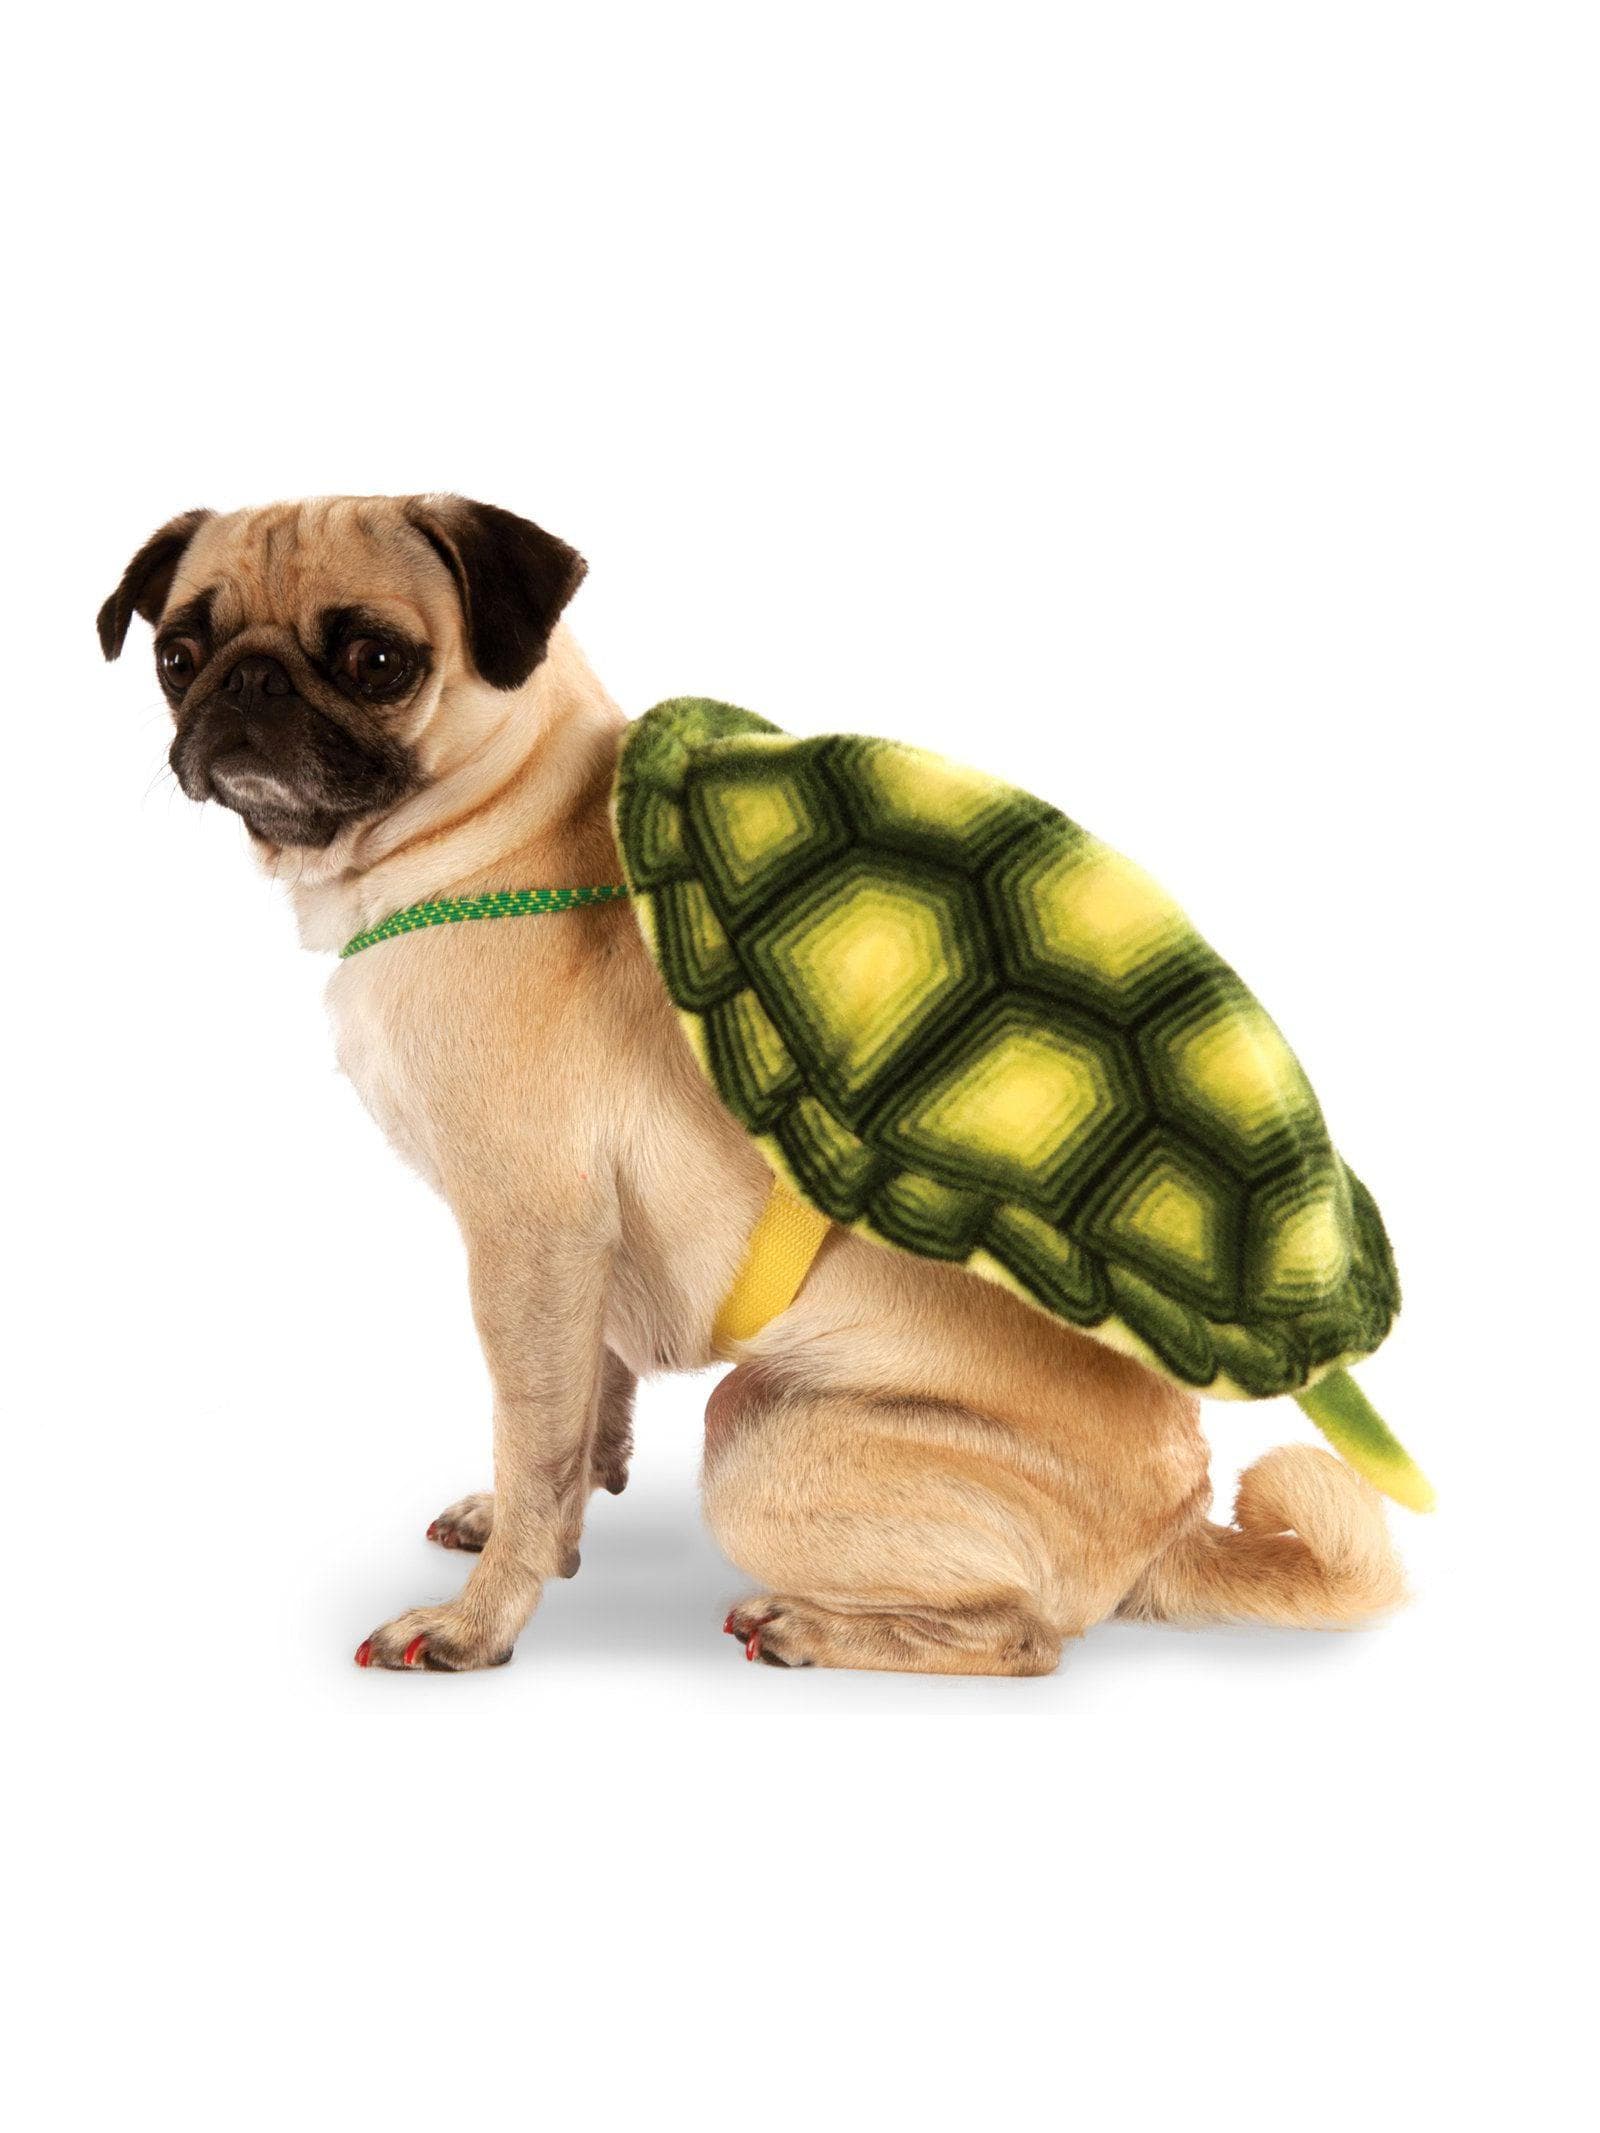 Turtle Shell Pet Costume - costumes.com